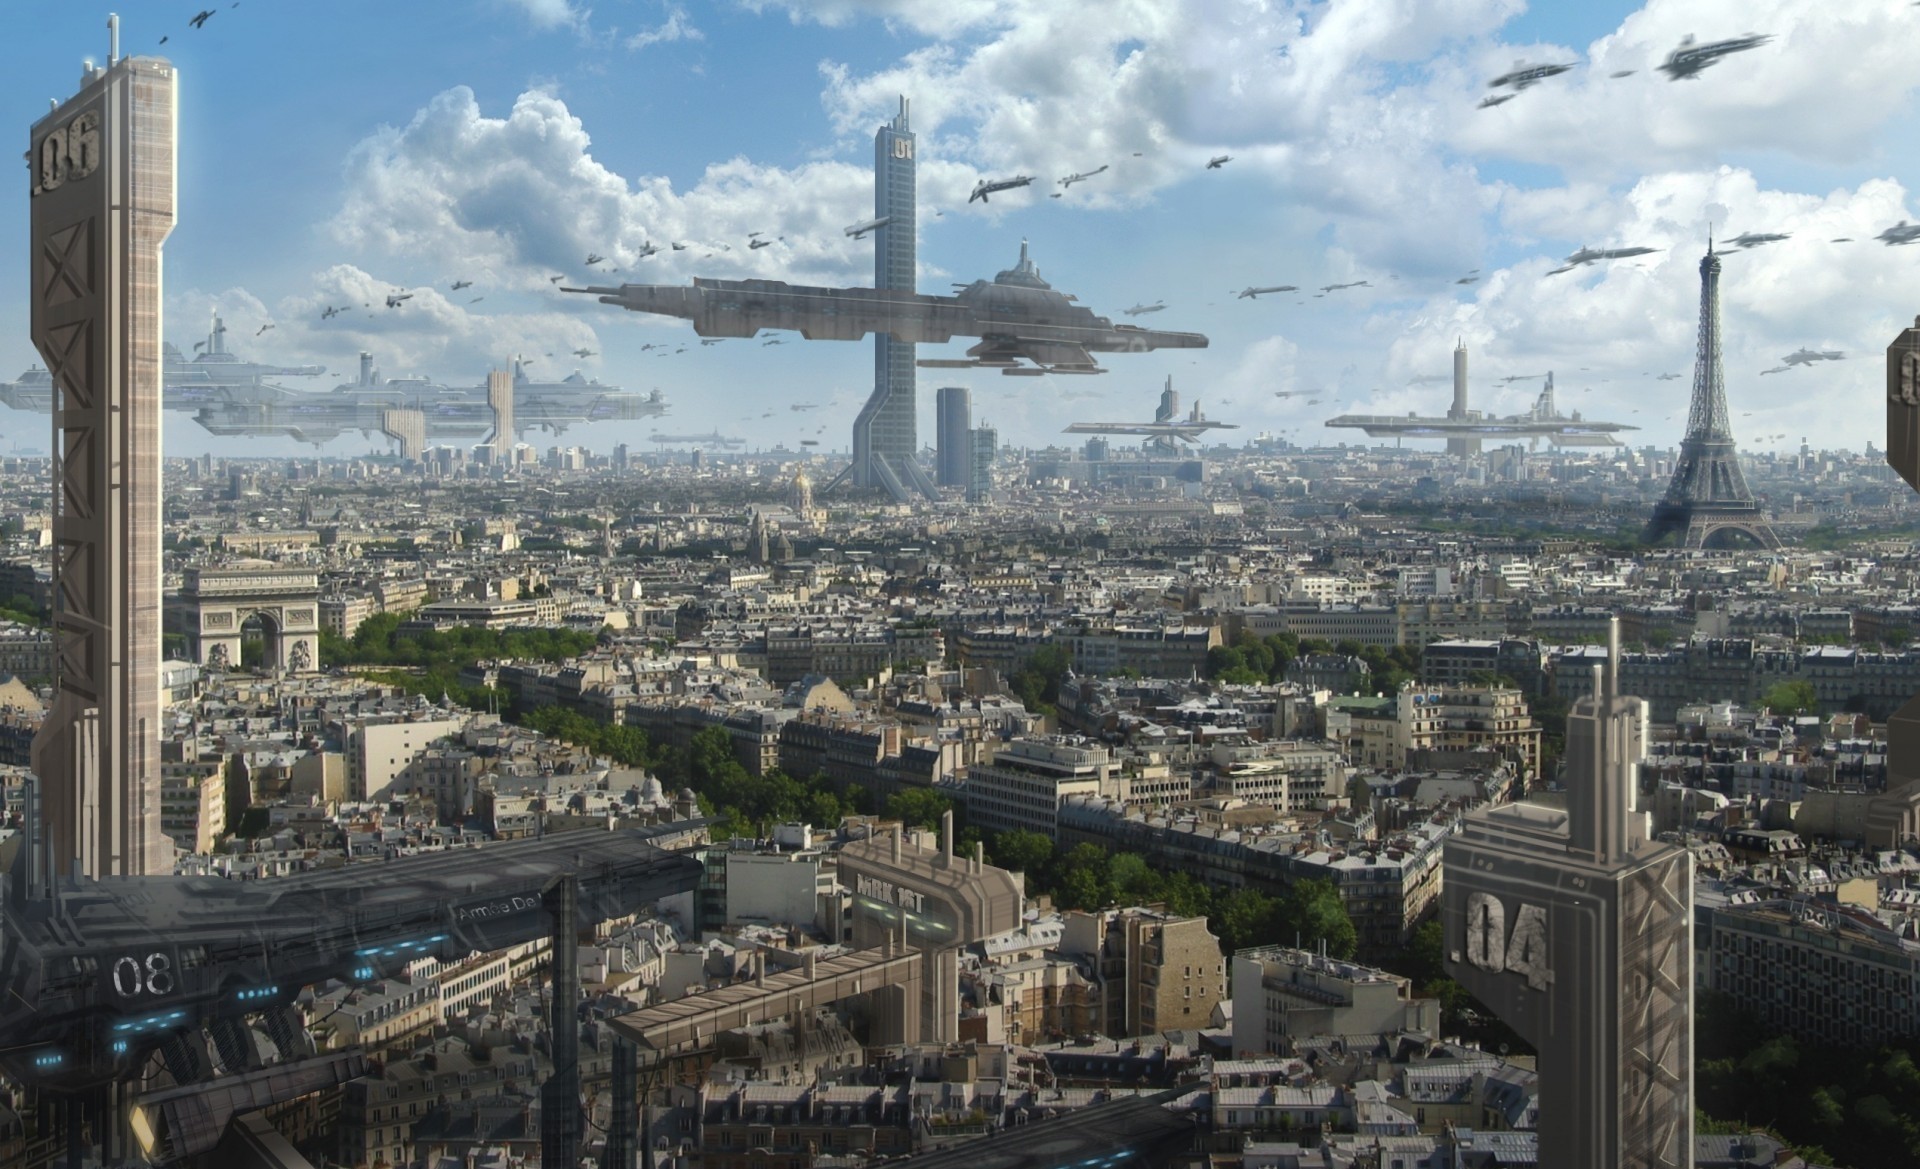 General 1920x1169 Paris France city futuristic science fiction digital art building cityscape clouds skyscraper Eiffel Tower street Arc de Triomphe spaceship airships futuristic city